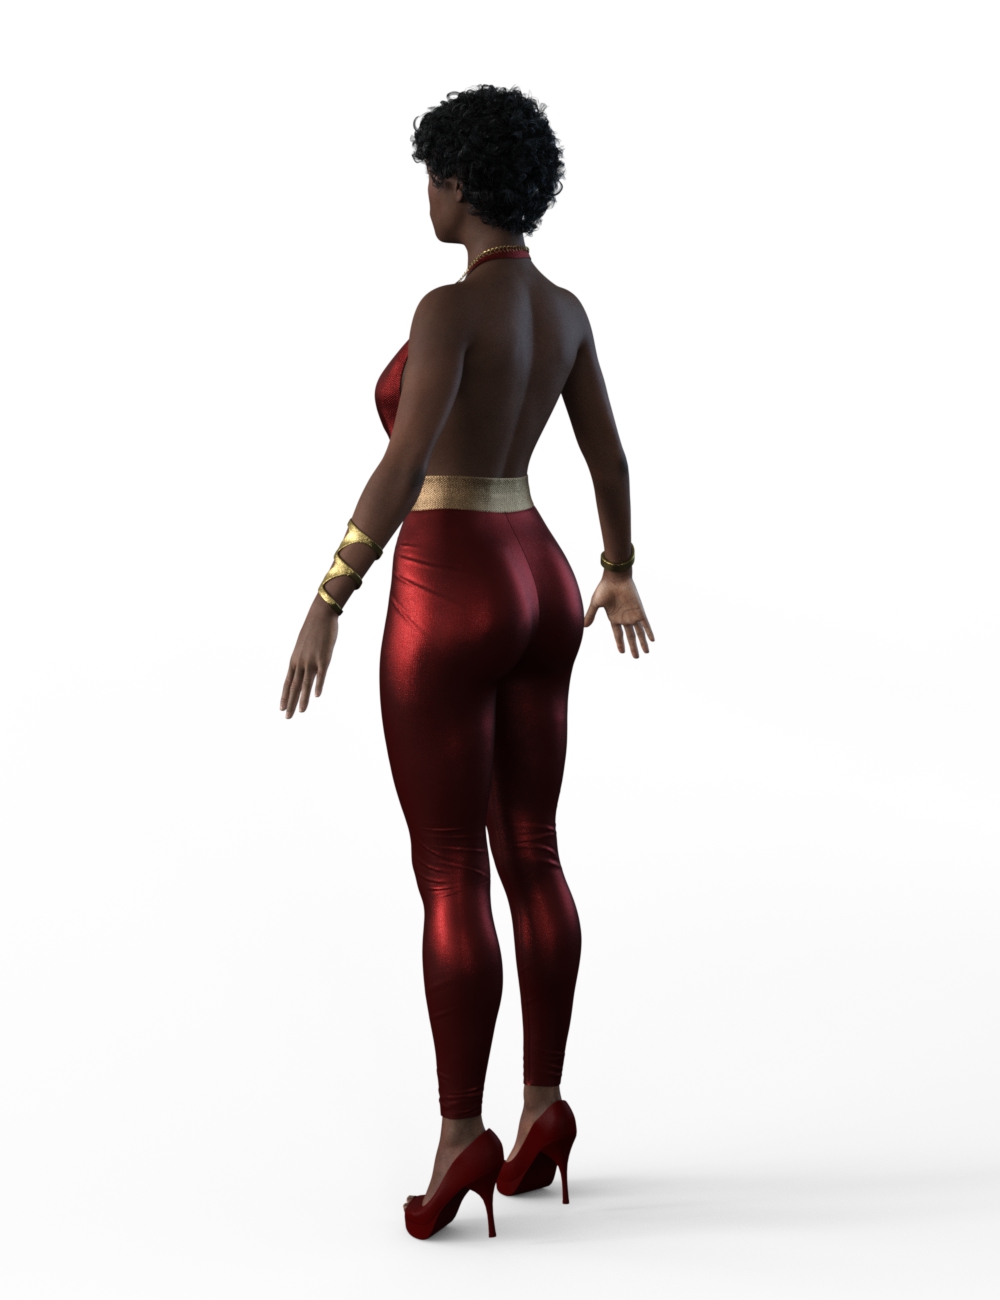 FBX- Lynsey Hot Jumpsuit by: Paleo, 3D Models by Daz 3D